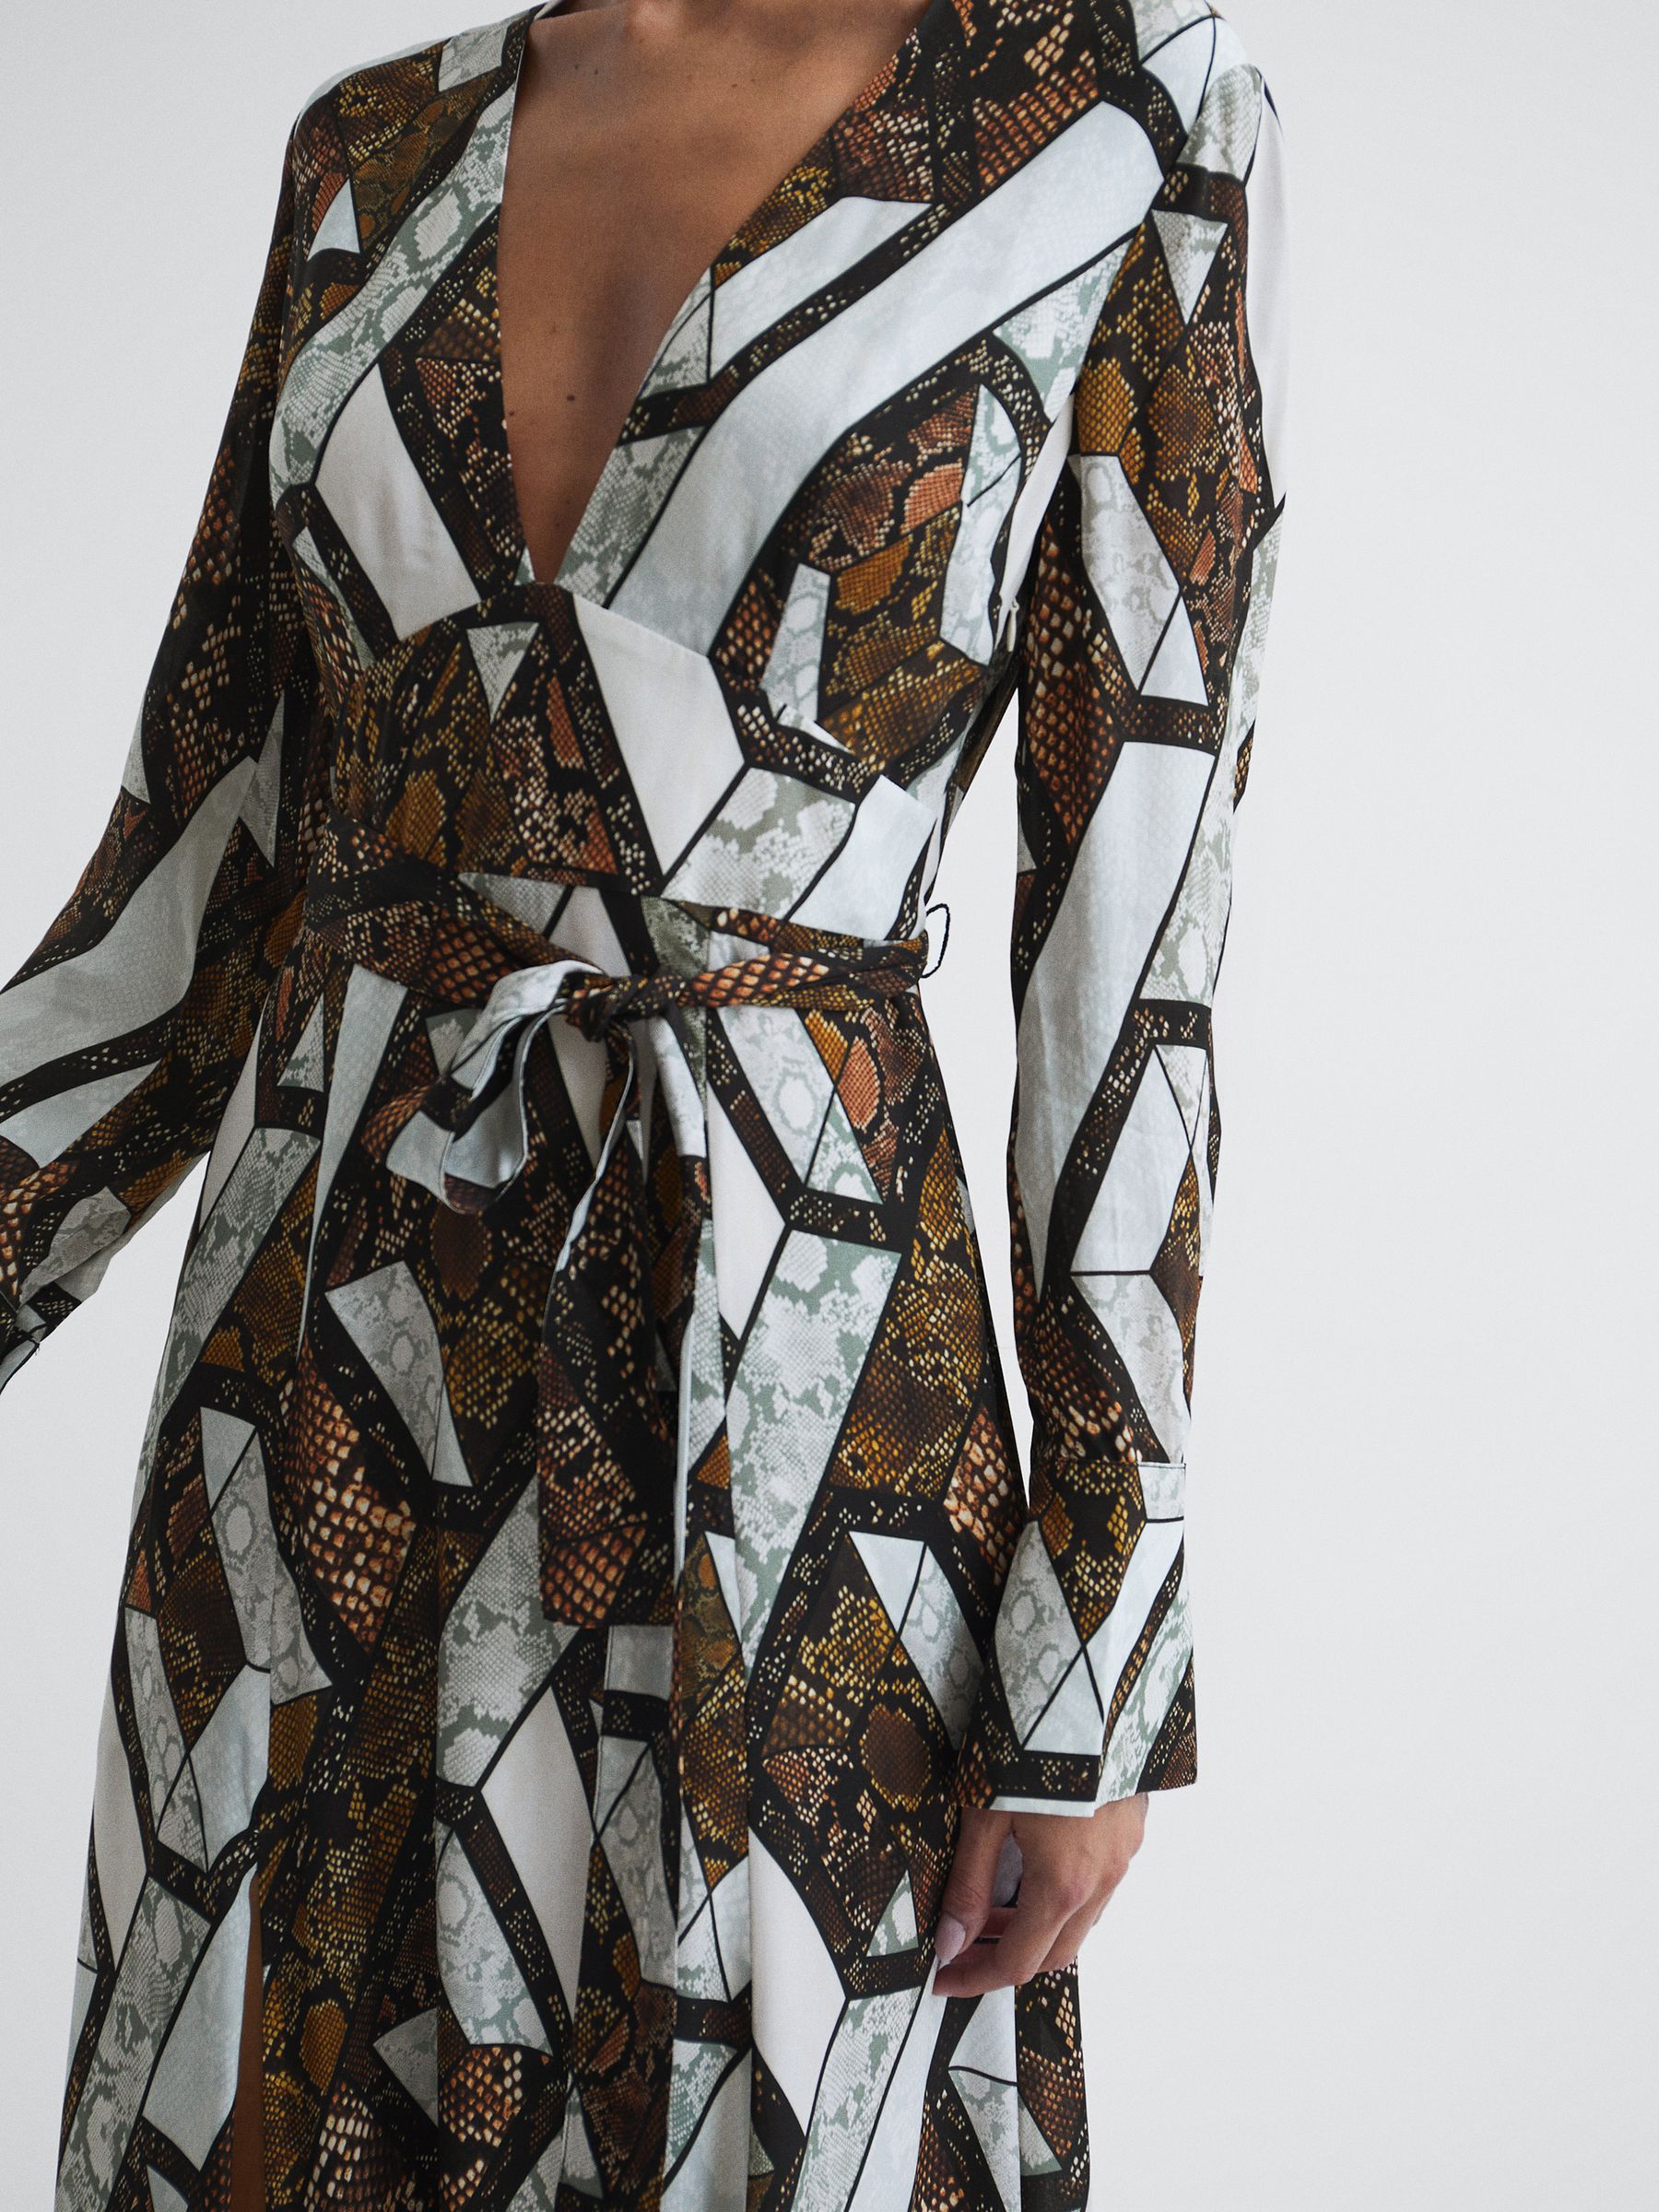 Reiss Loren Snake Print Plunge Maxi Dress | REISS USA